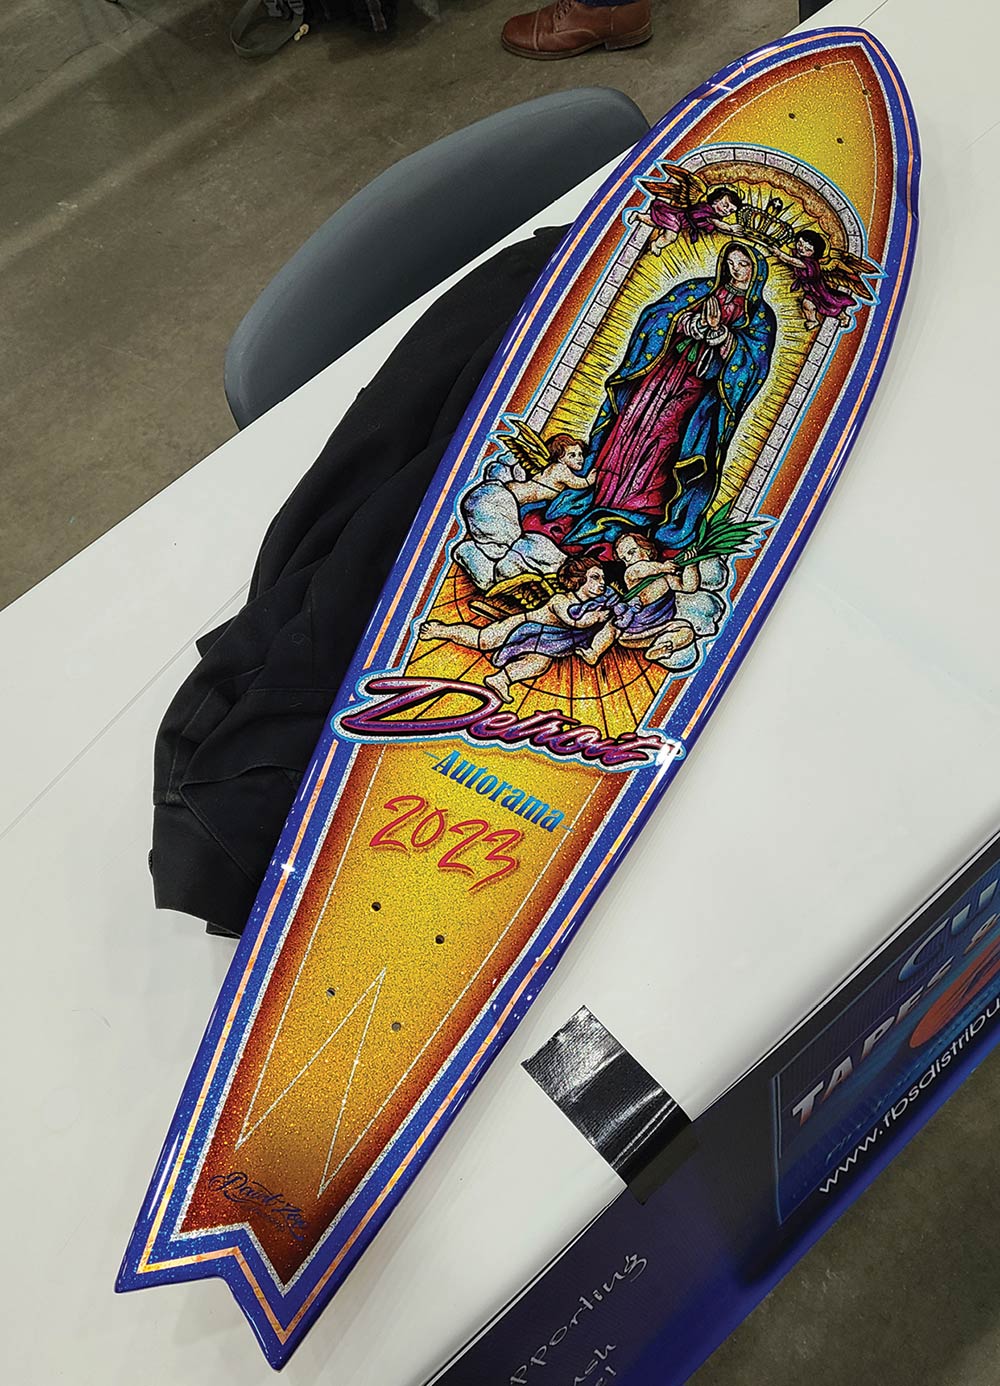 Fully custom painted surfboard